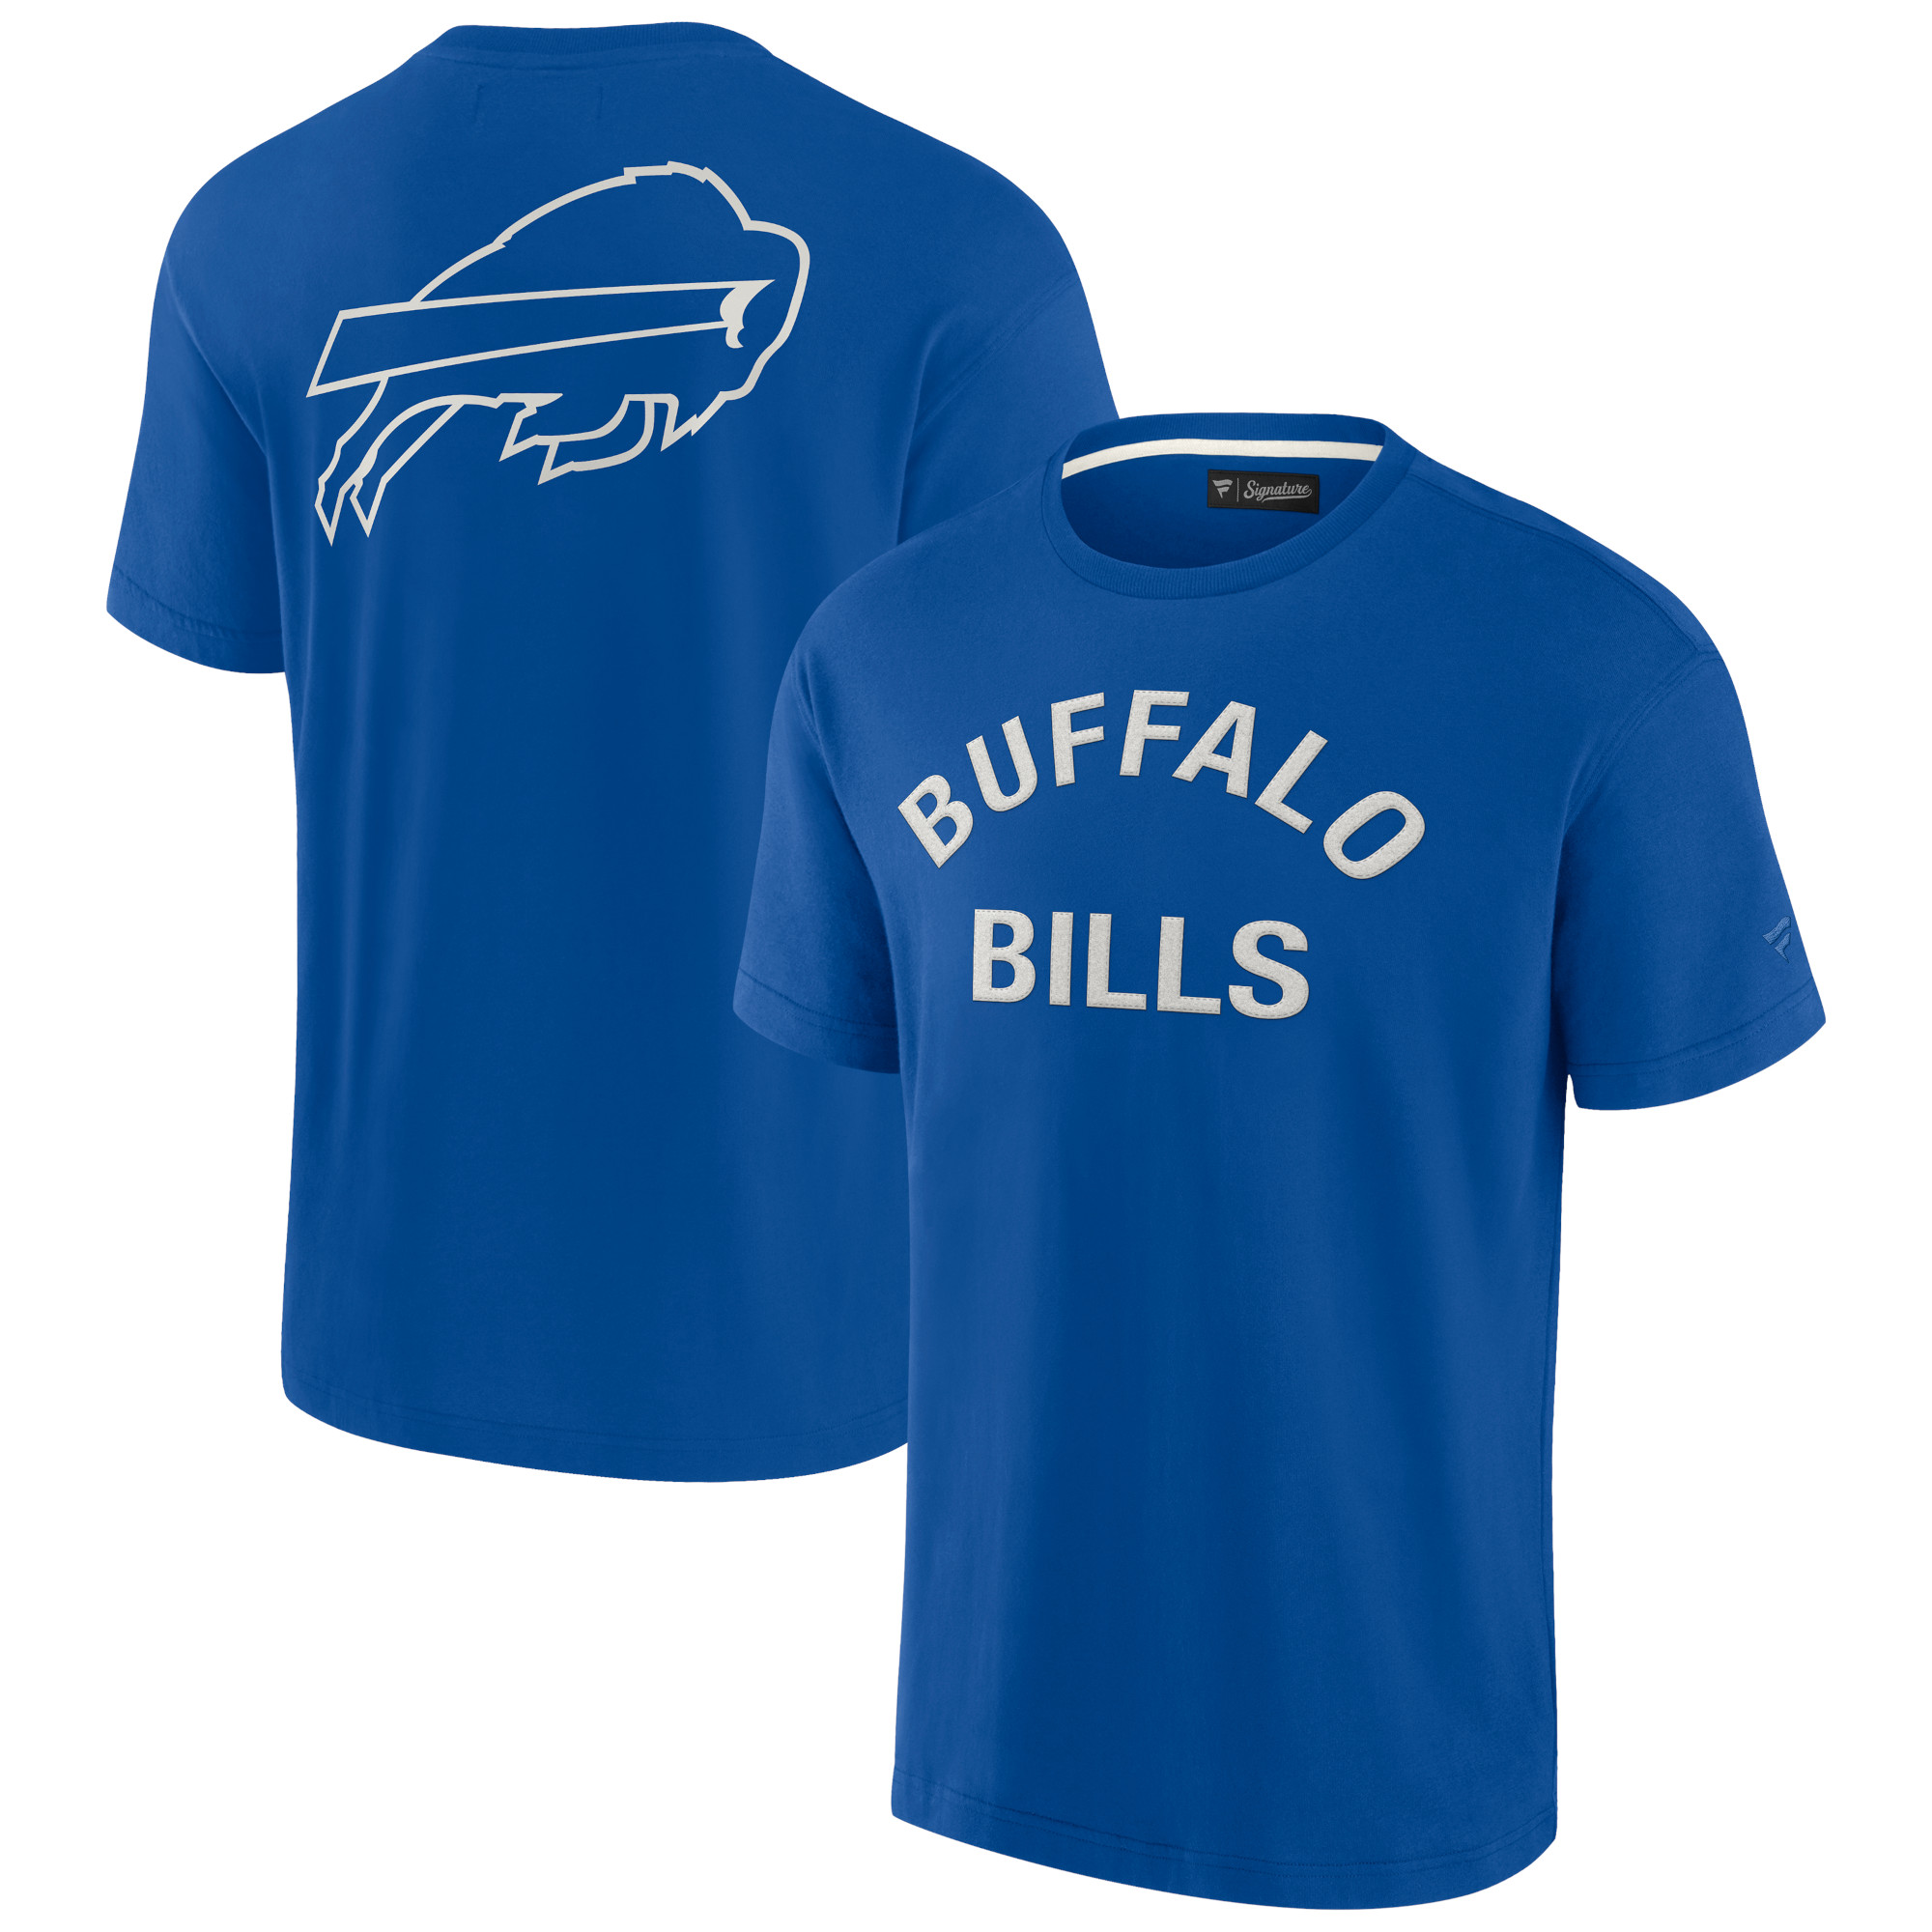 Unisex Fanatics Royal Buffalo Bills Elements Superweiches Kurzarm-T-Shirt